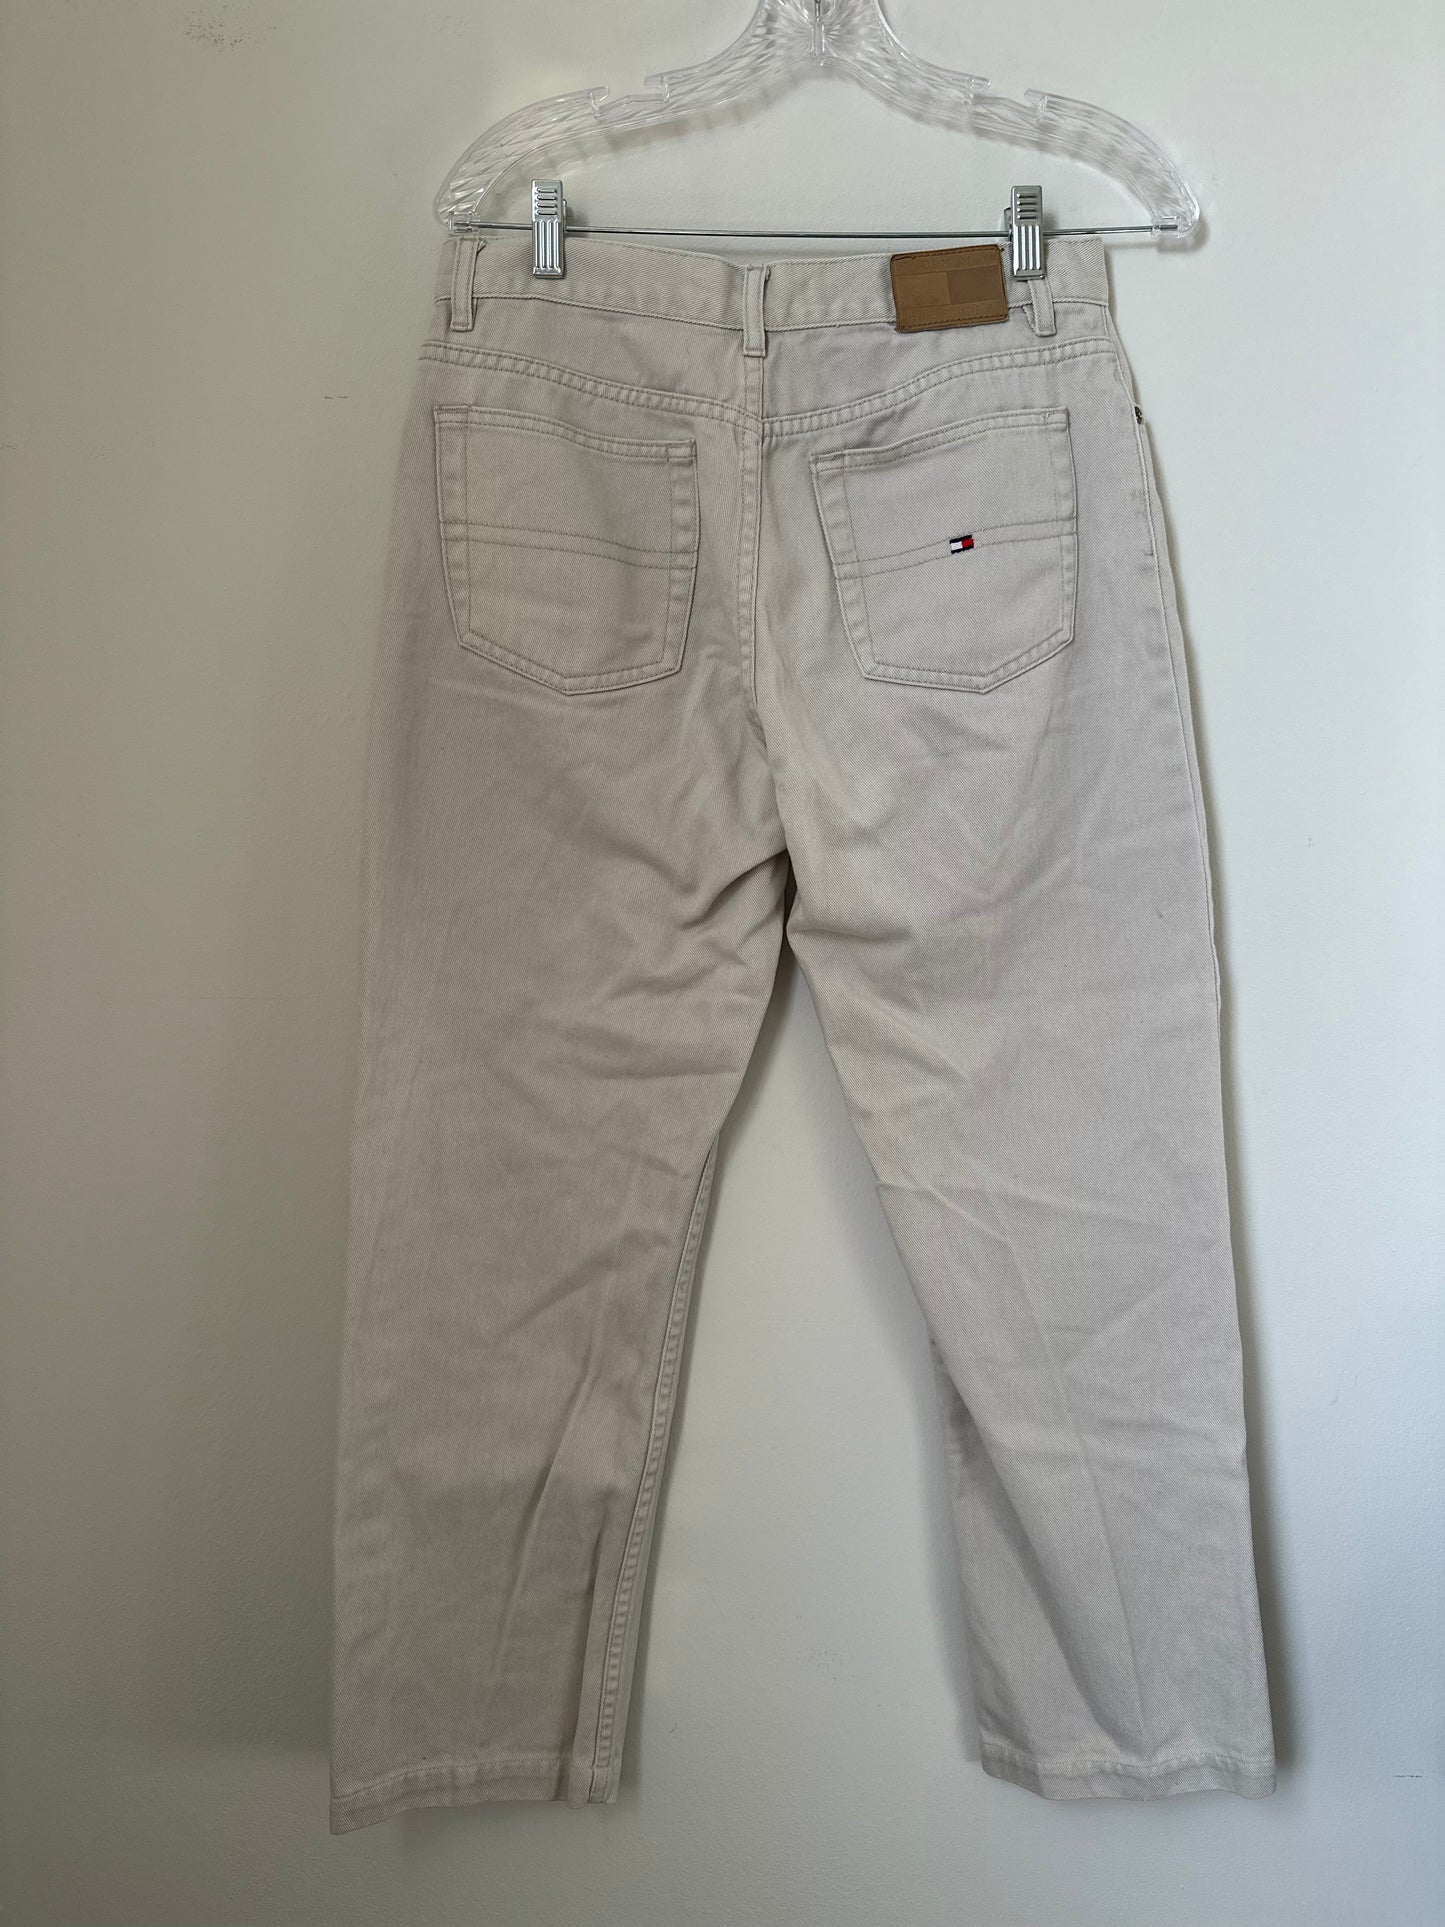 Tommy Hilfiger Cream Colored Denim Pants